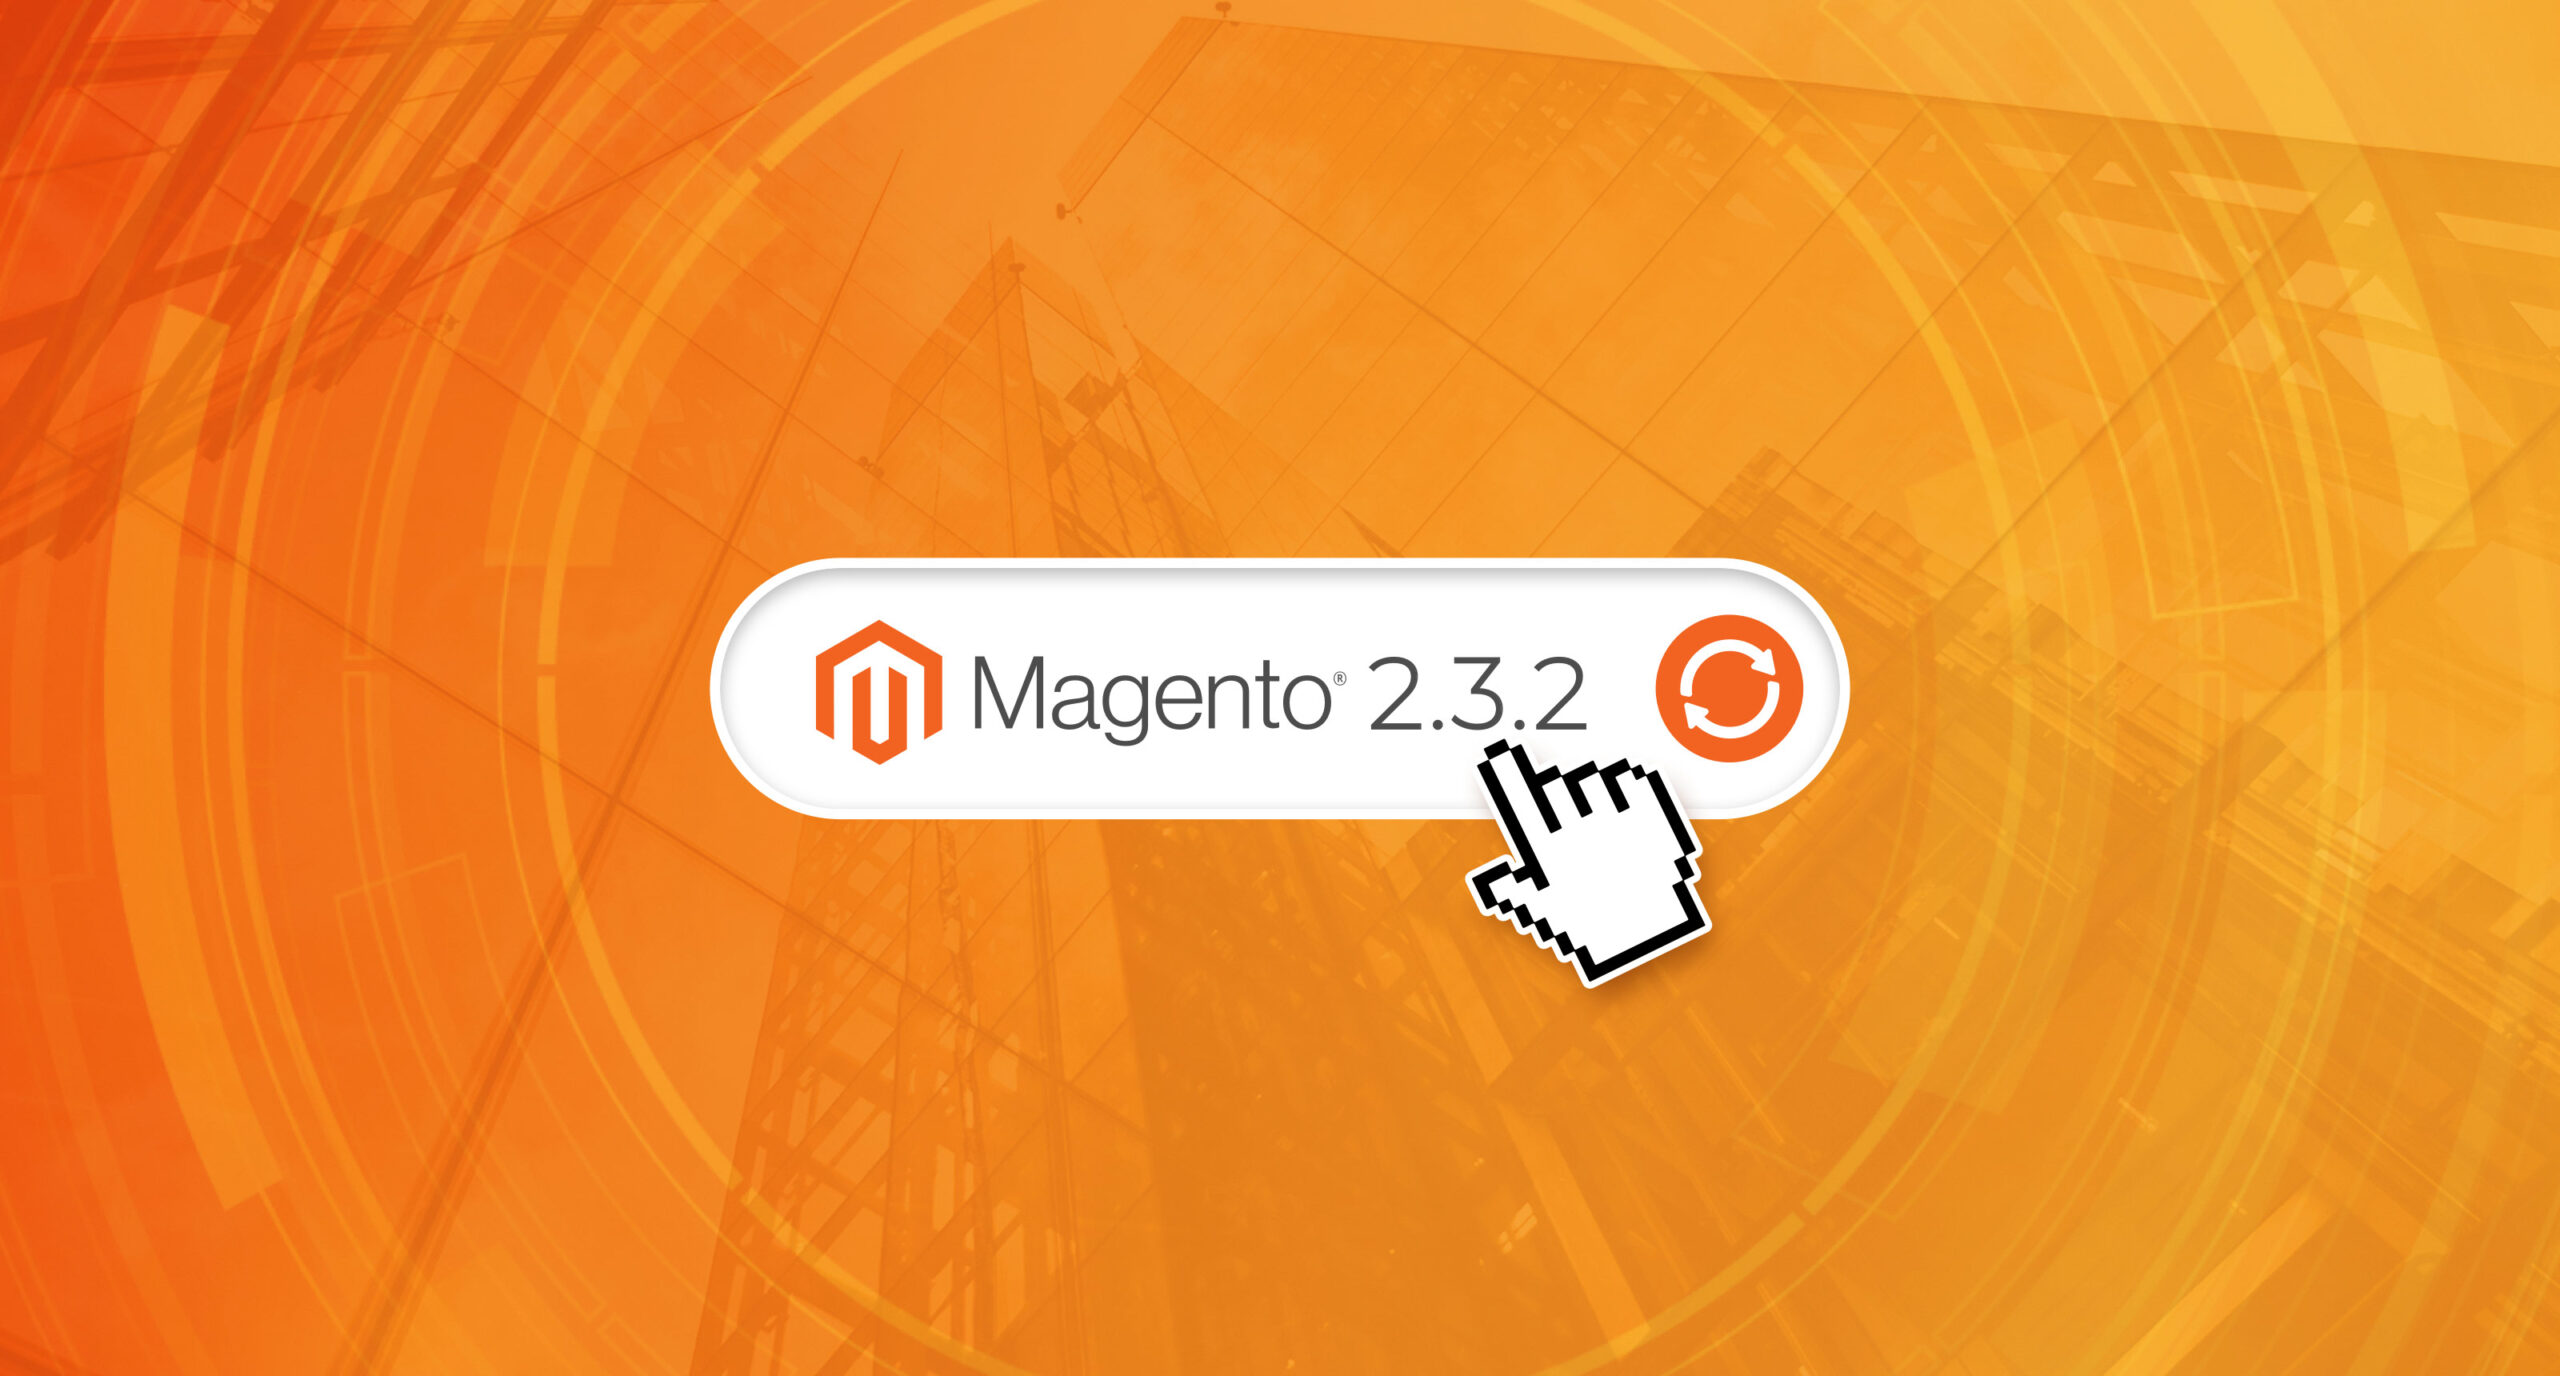 Magento 2.3.2 update